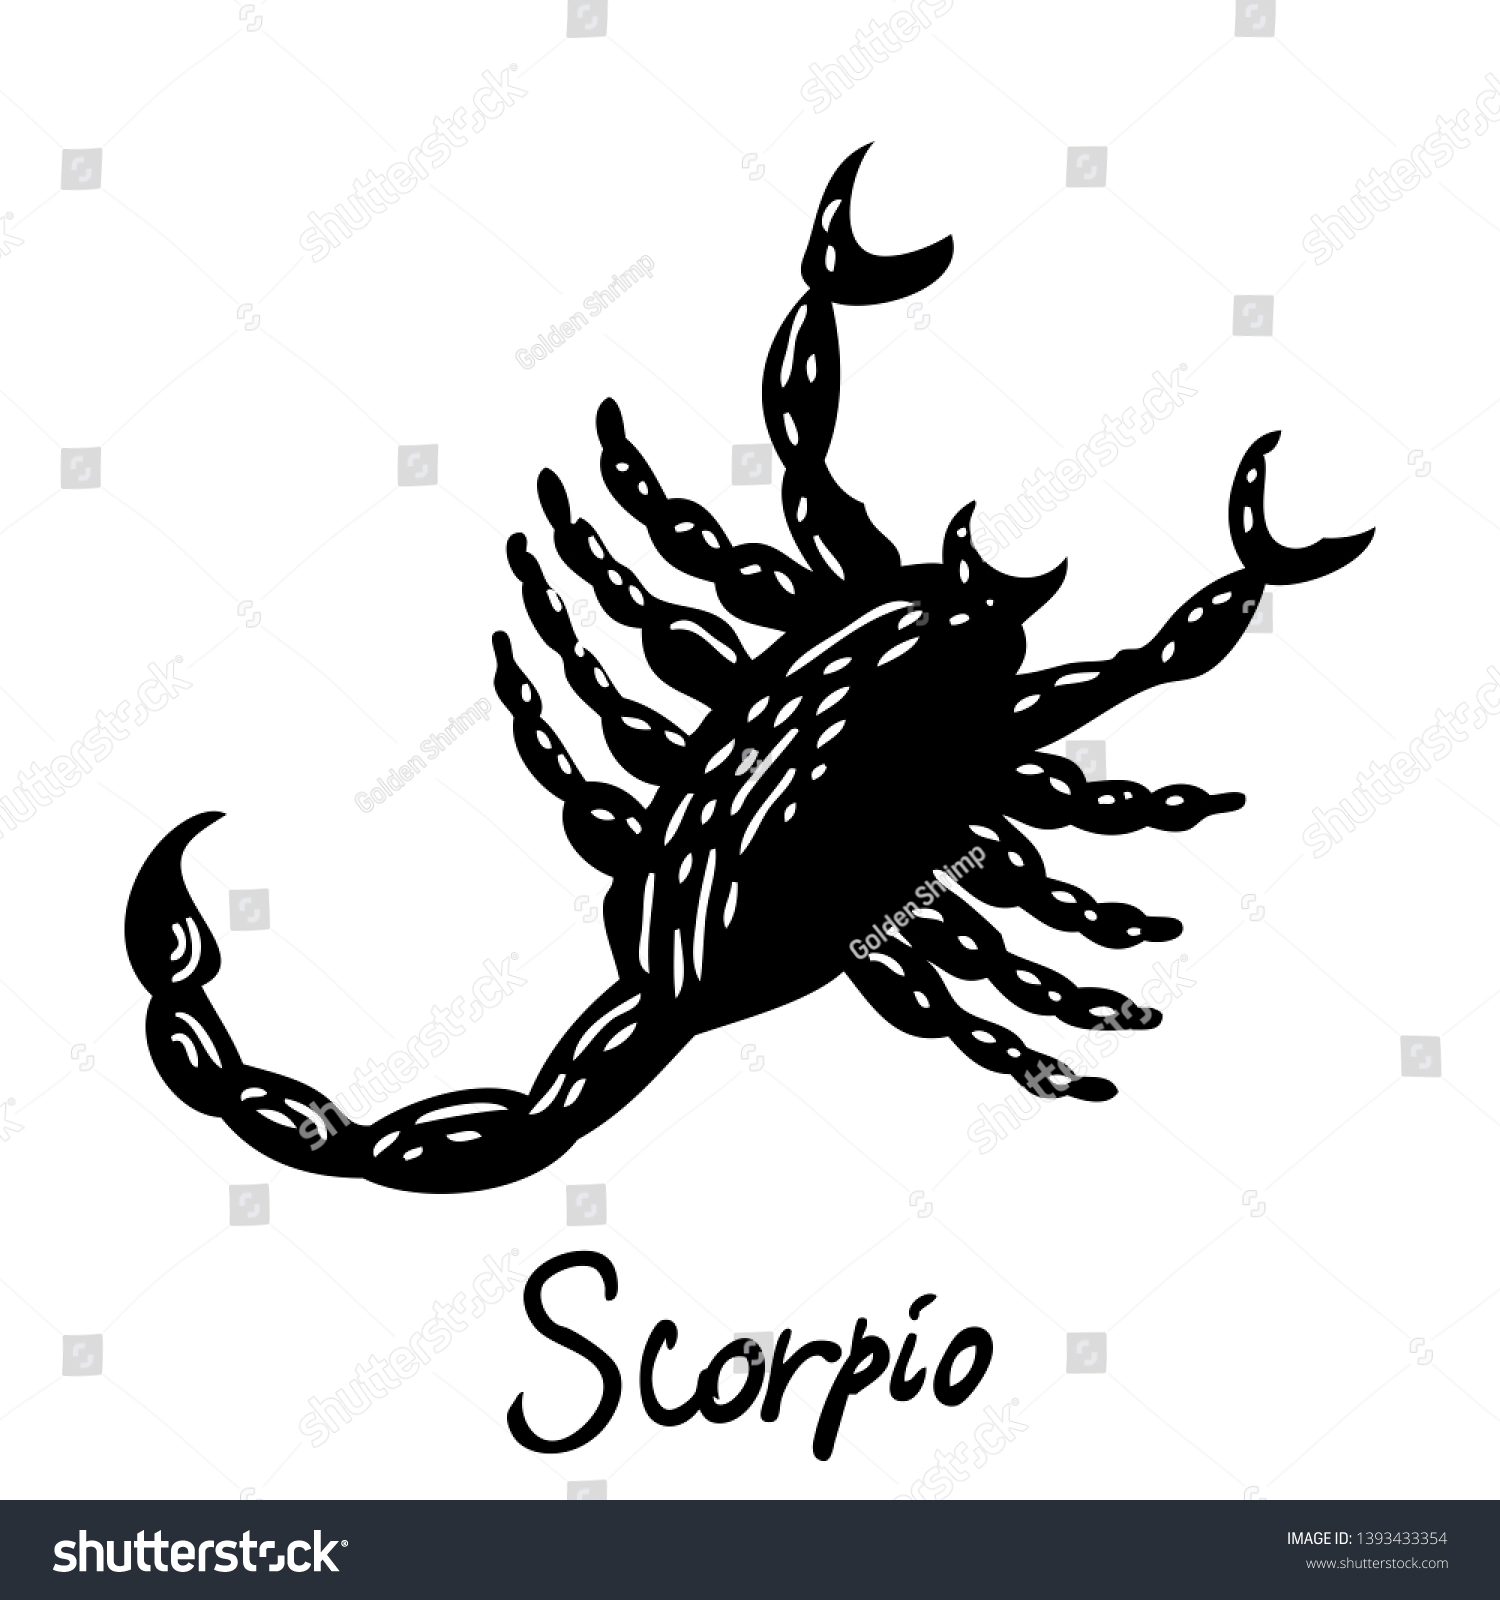 Scorpio Zodiac Hand Drawing Sign Horoscope Stock Vector (Royalty Free ...